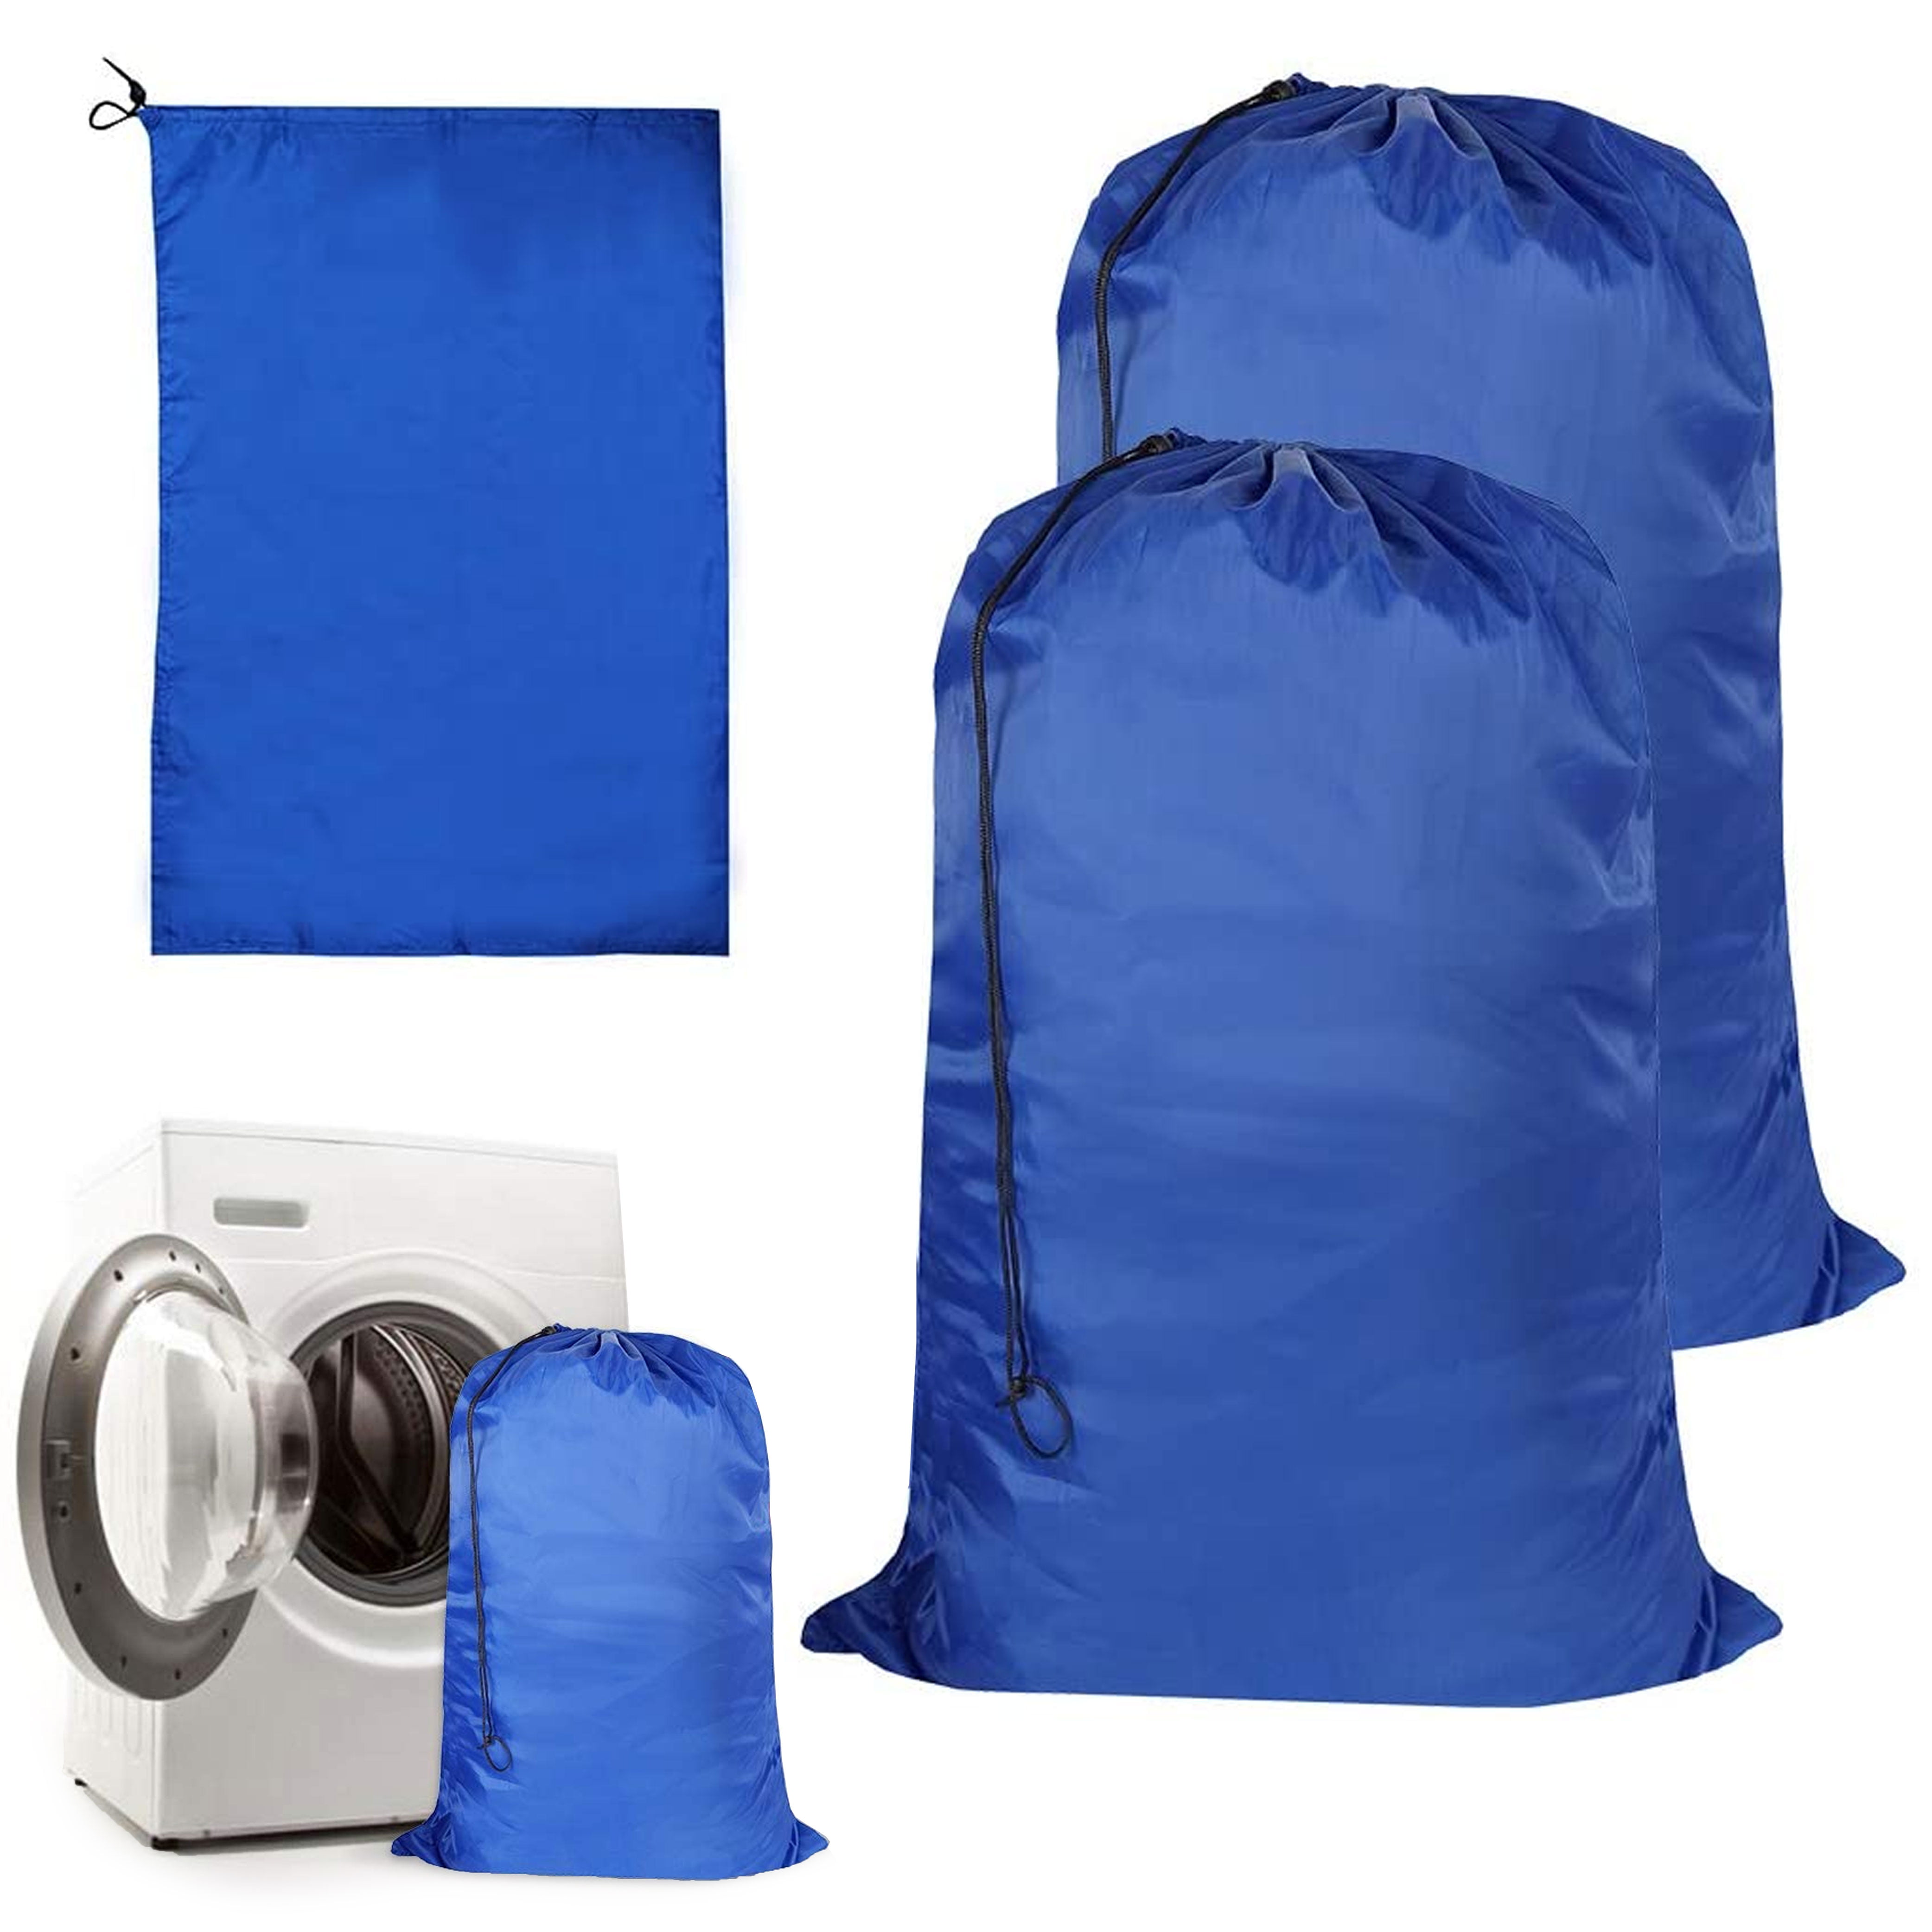 6 Heavy Duty Jumbo Sized Laundry Bag Nylon 29"x 40" College Home Dorm Gym Camp 